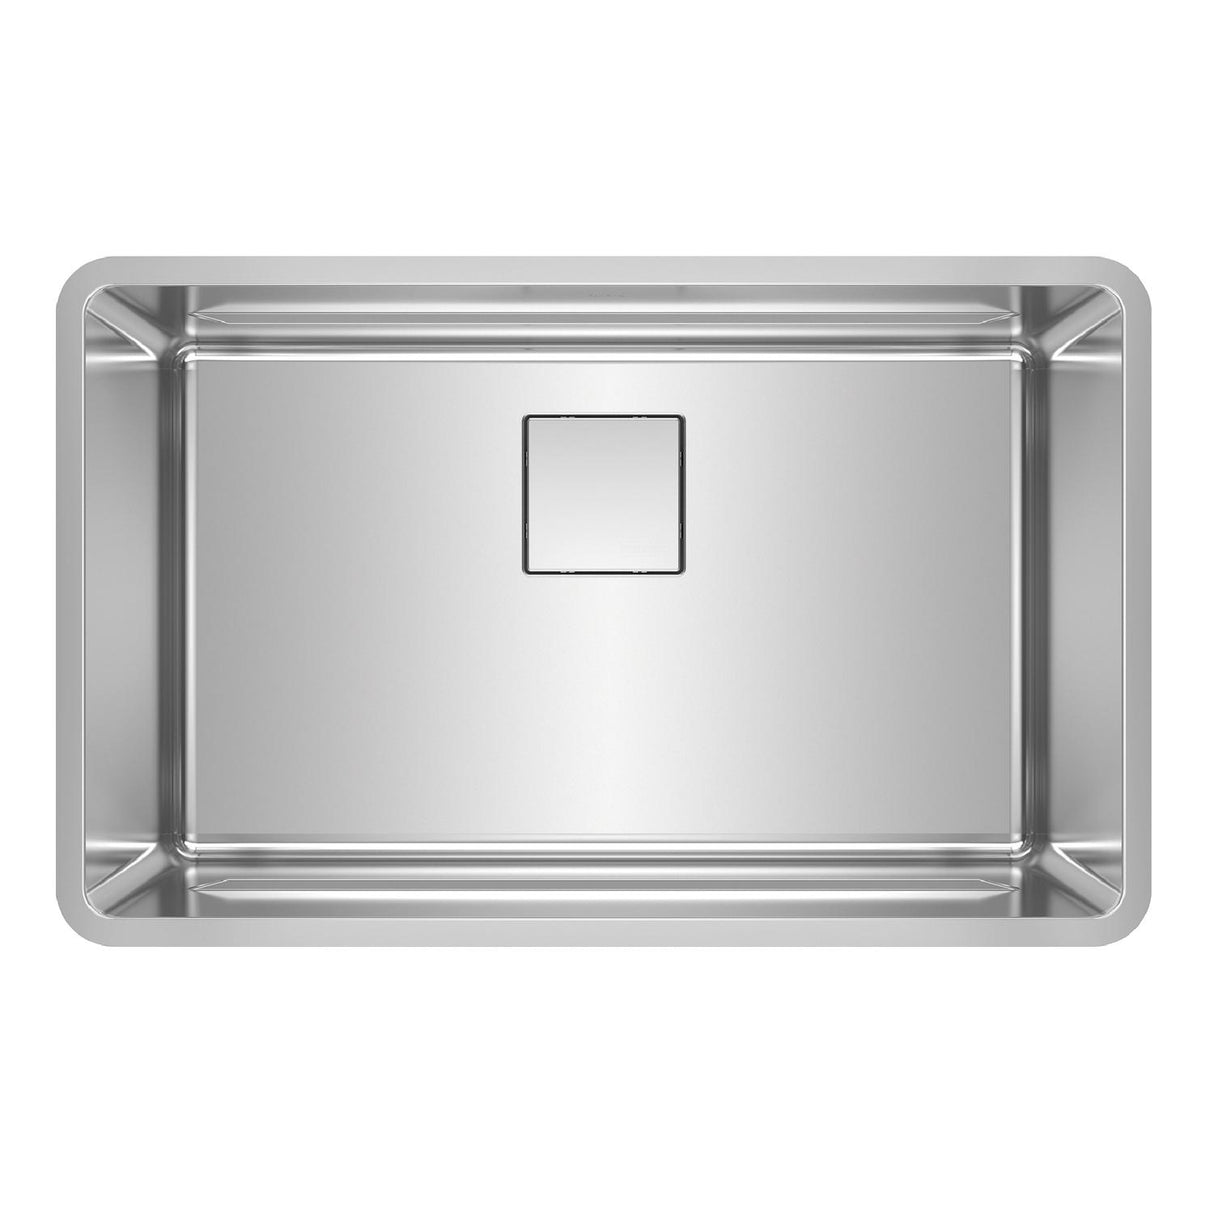 FRANKE PTX110-28 Pescara 29.5-in. x 18.5-in. 18 Gauge Stainless Steel Undermount Single Bowl Kitchen Sink - PTX110-28 In Pearl